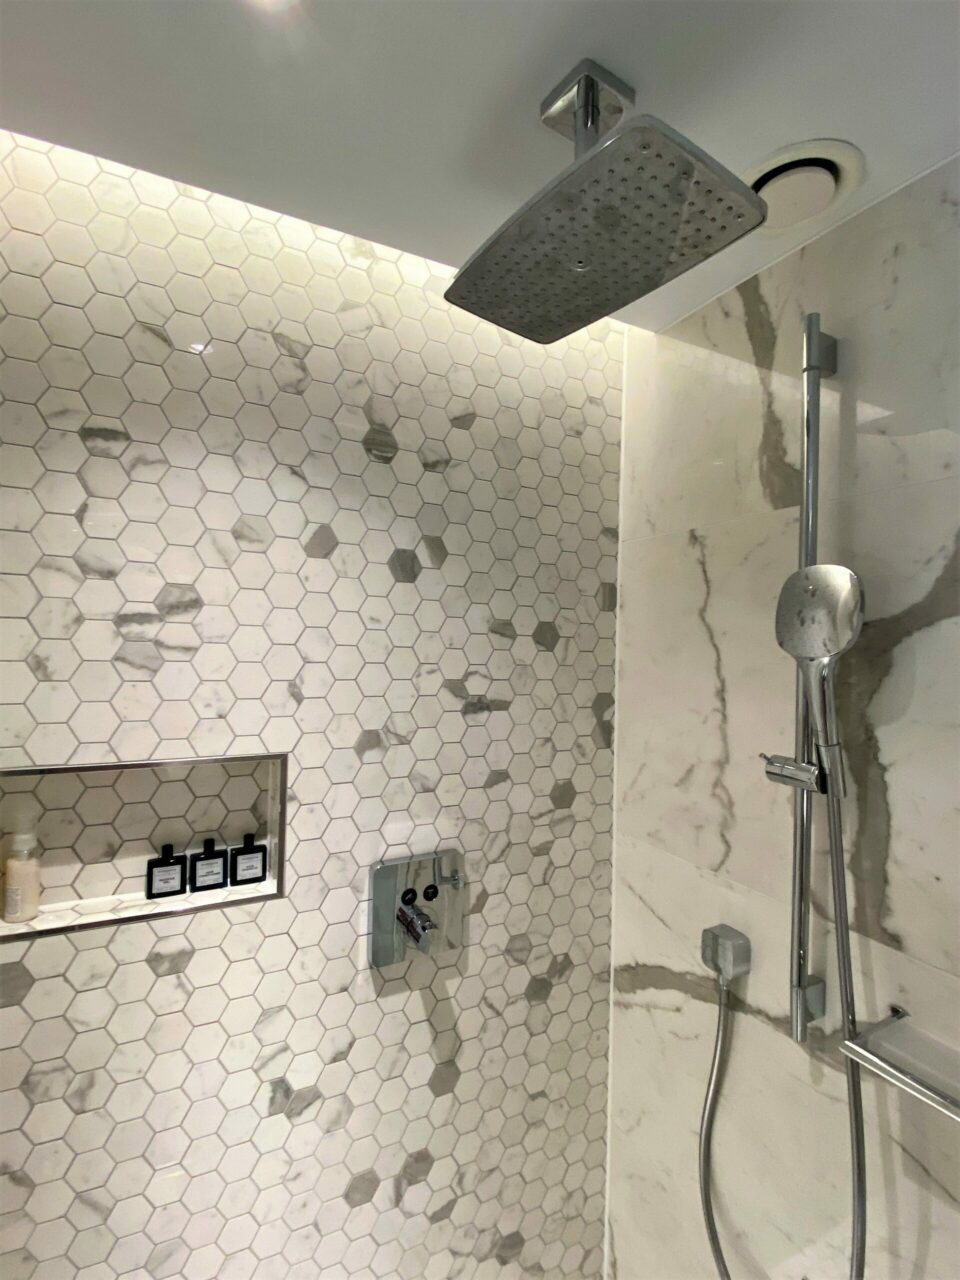 The Dixon hotel shower room